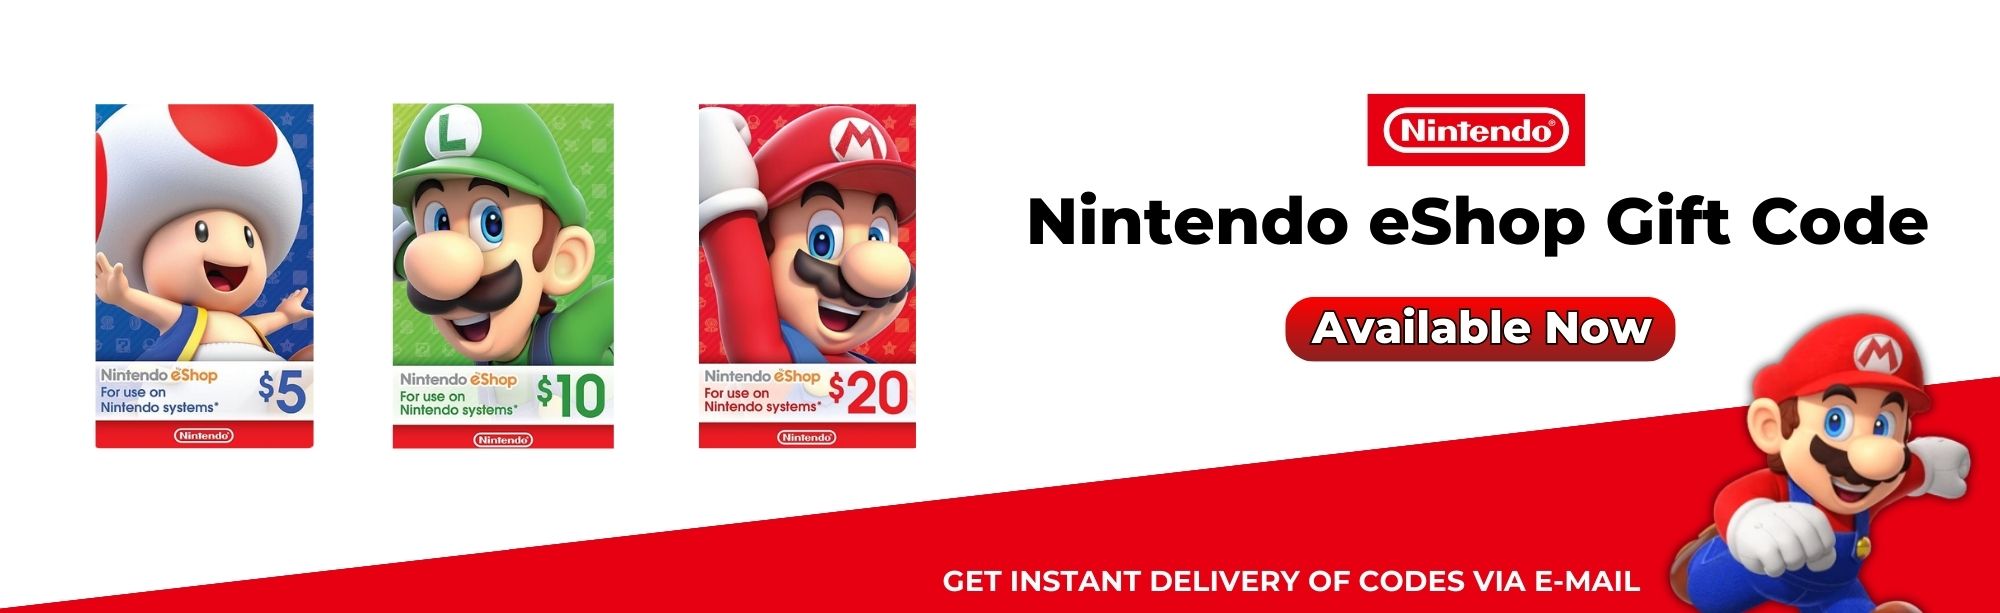 Nintendo eShop codes Website banners